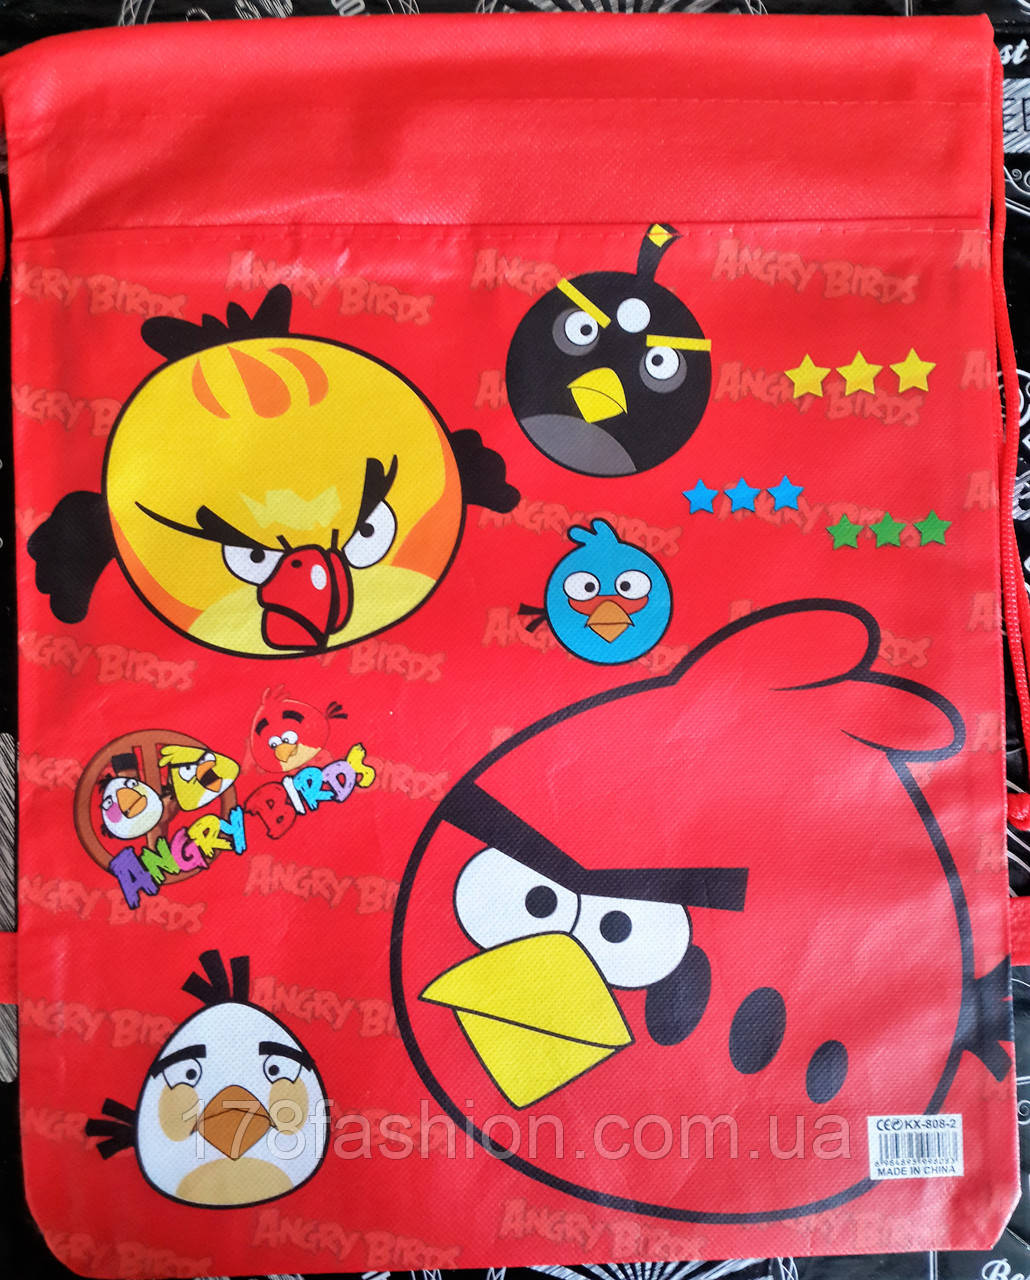 Сумка-рюкзак c героями DISNEY Angry Birds №1